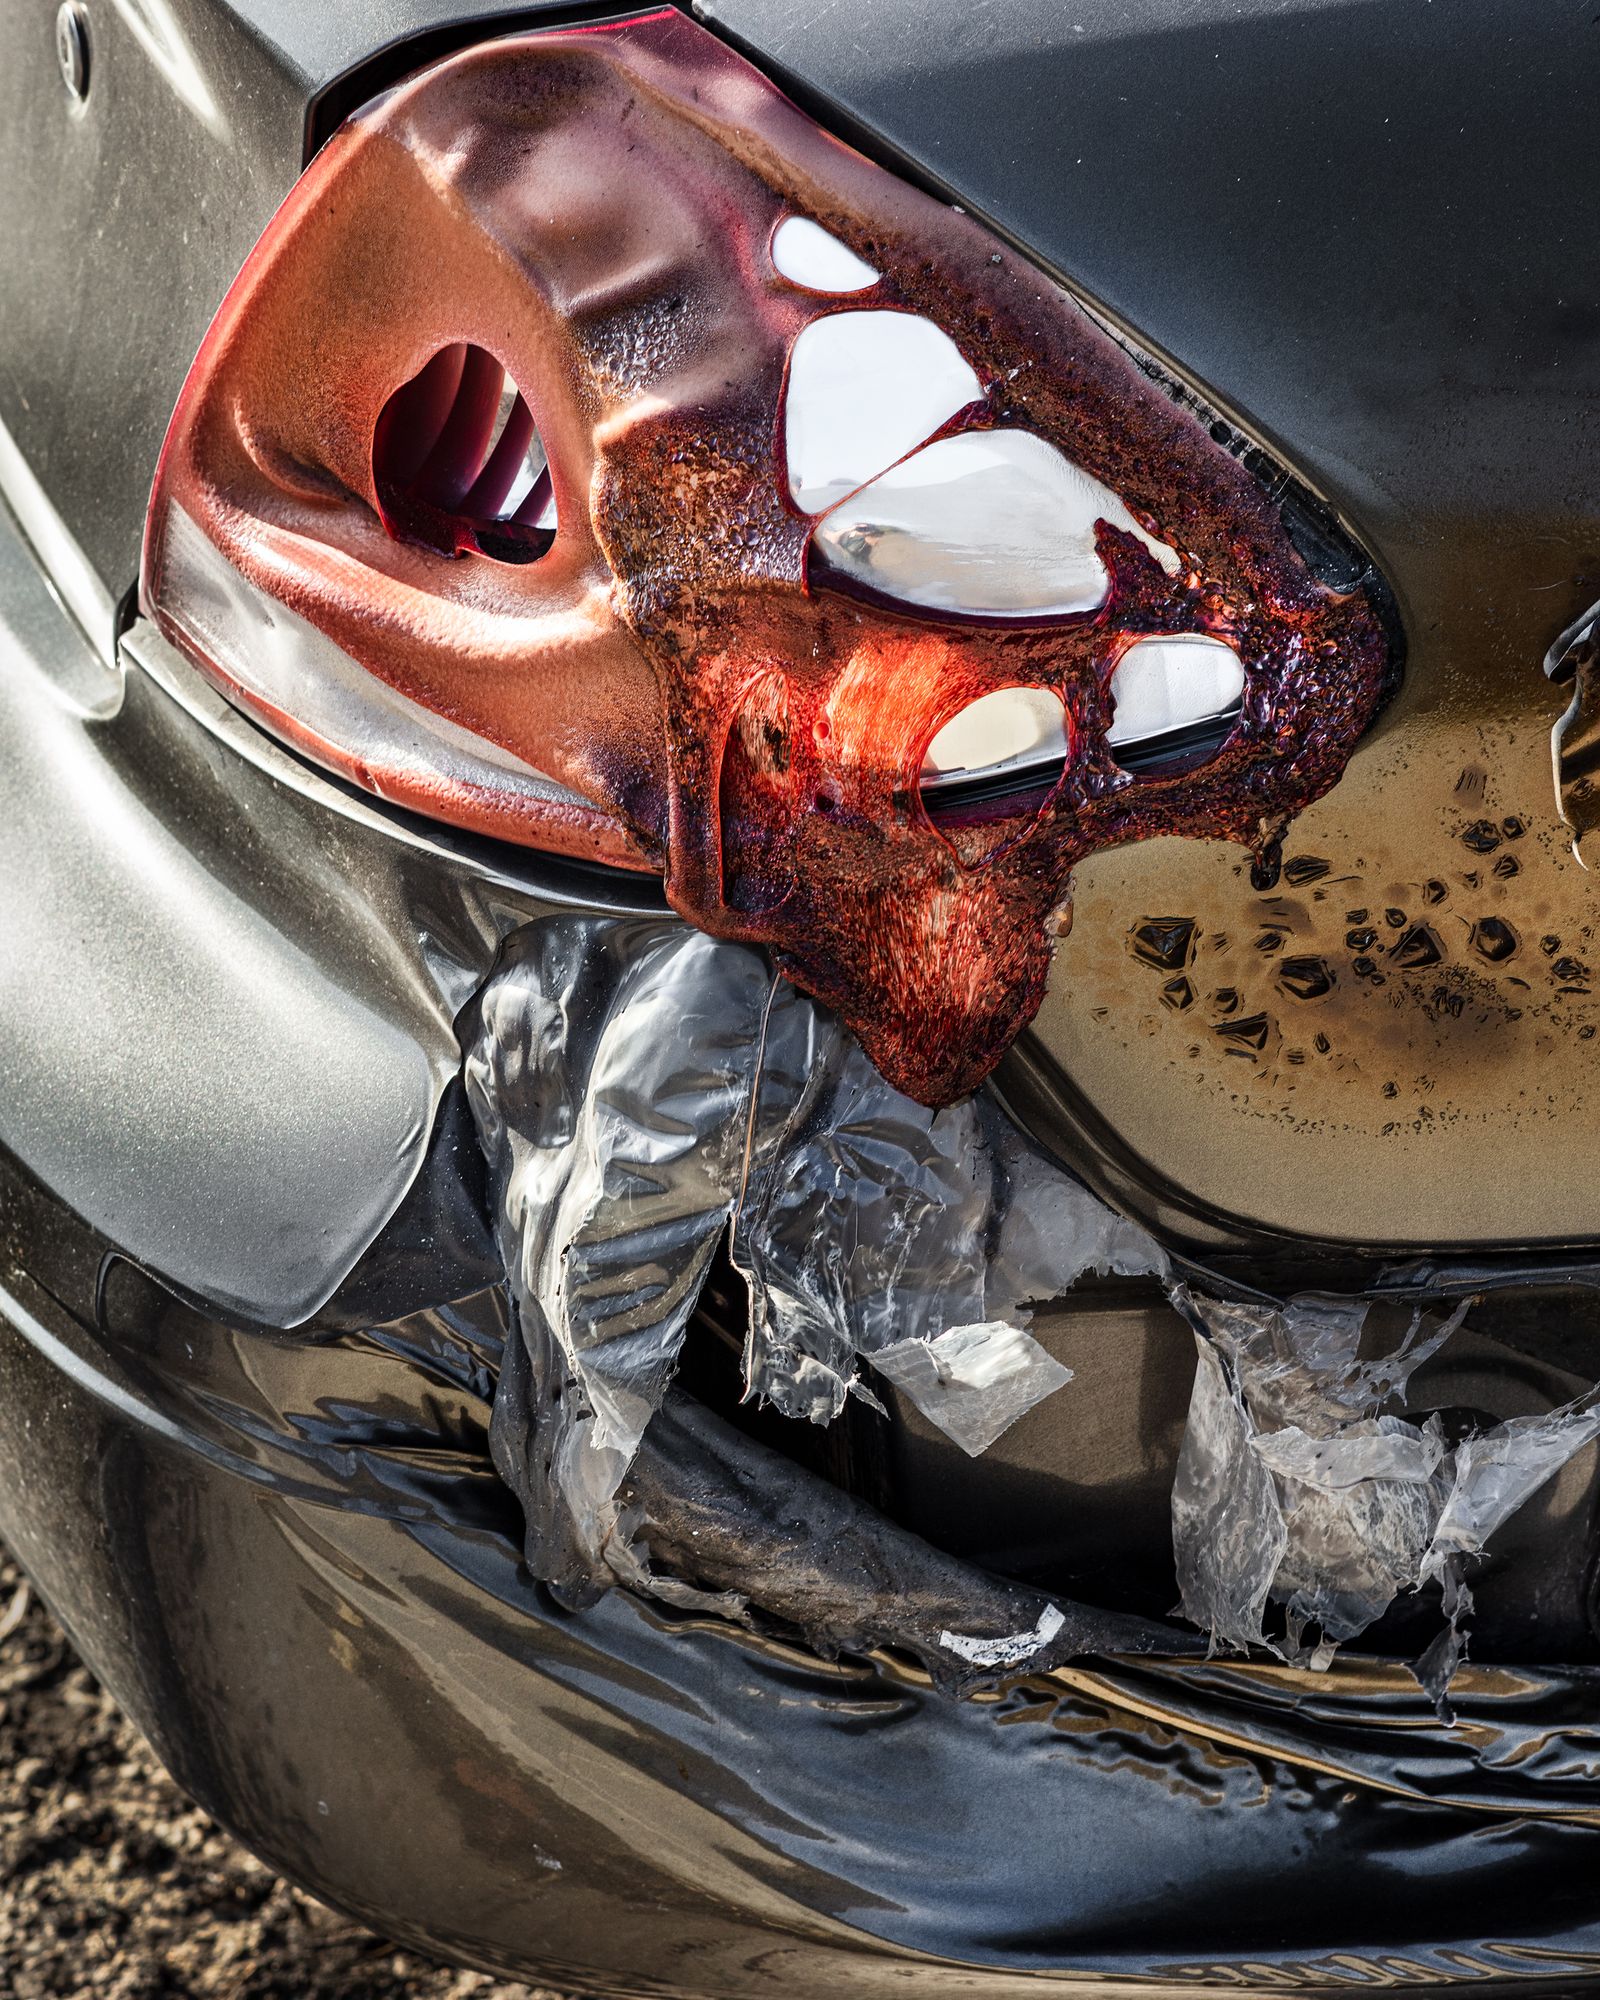 © Anastasia Samoylova - Automobile taillight melted in Tick Fire, CA